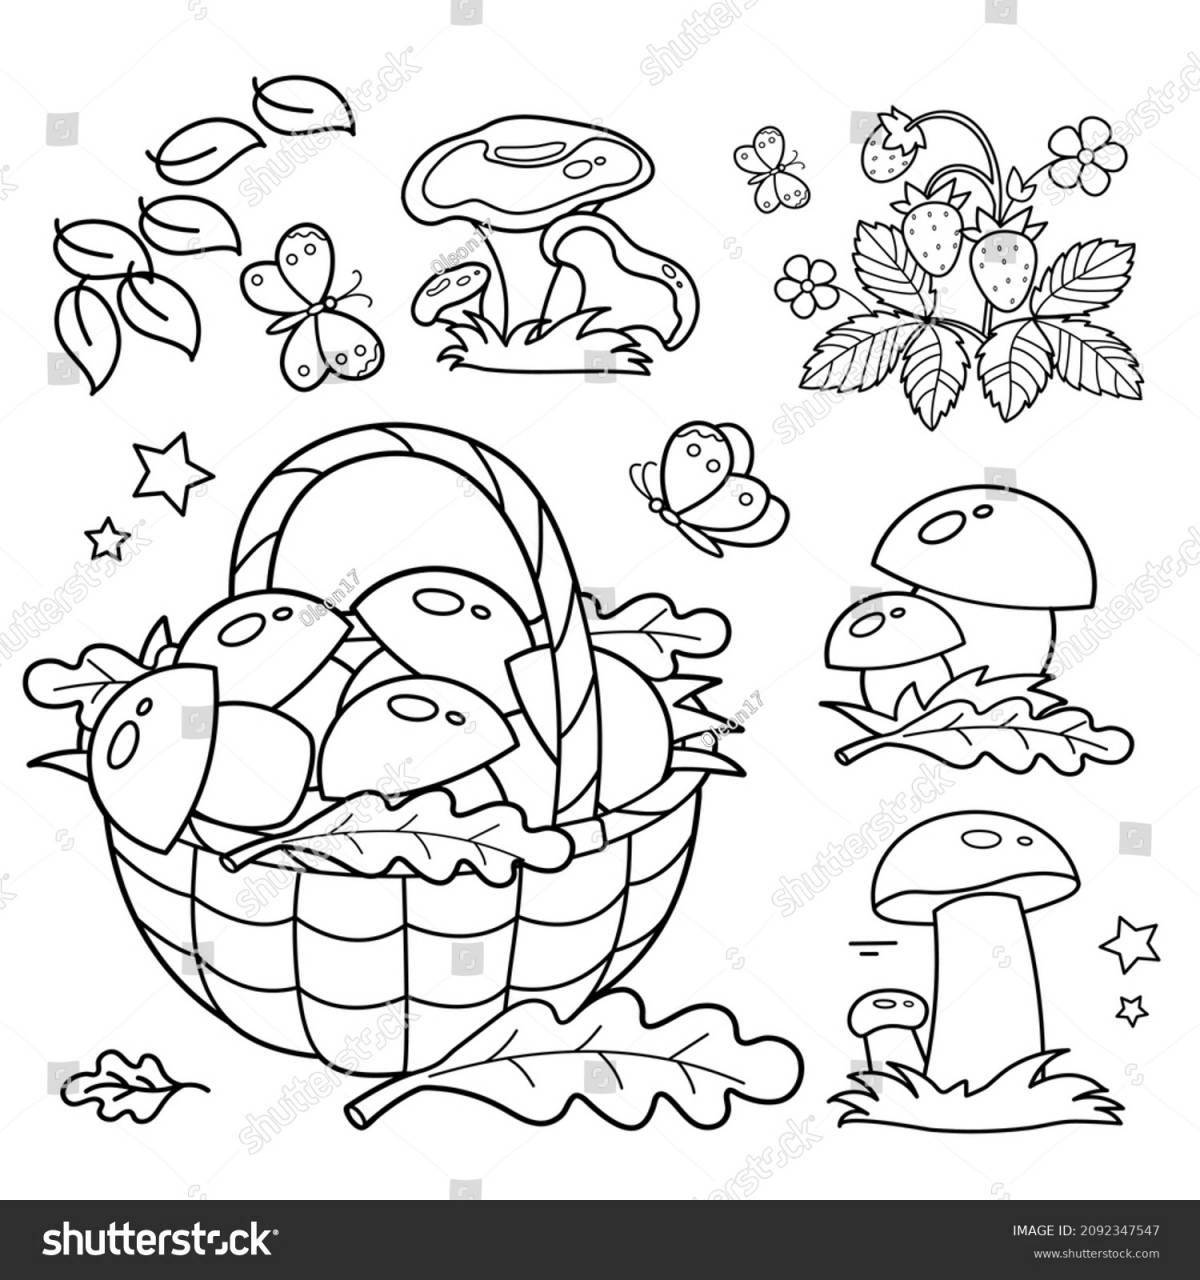 Coloring page festive mushroom basket